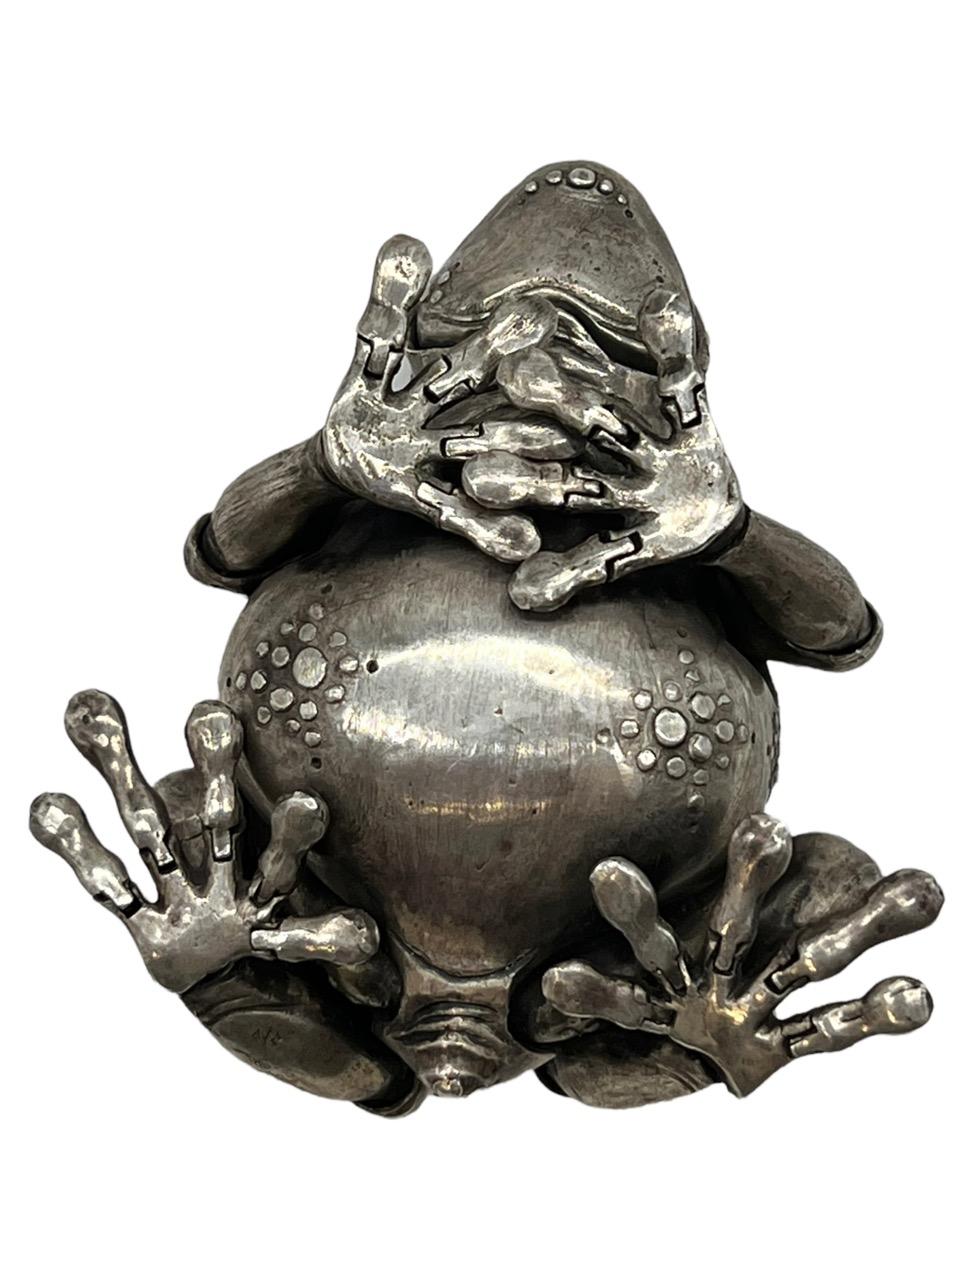 Oleg Konstantinov Fully Articulated Frog Made of Sterling Silver 9